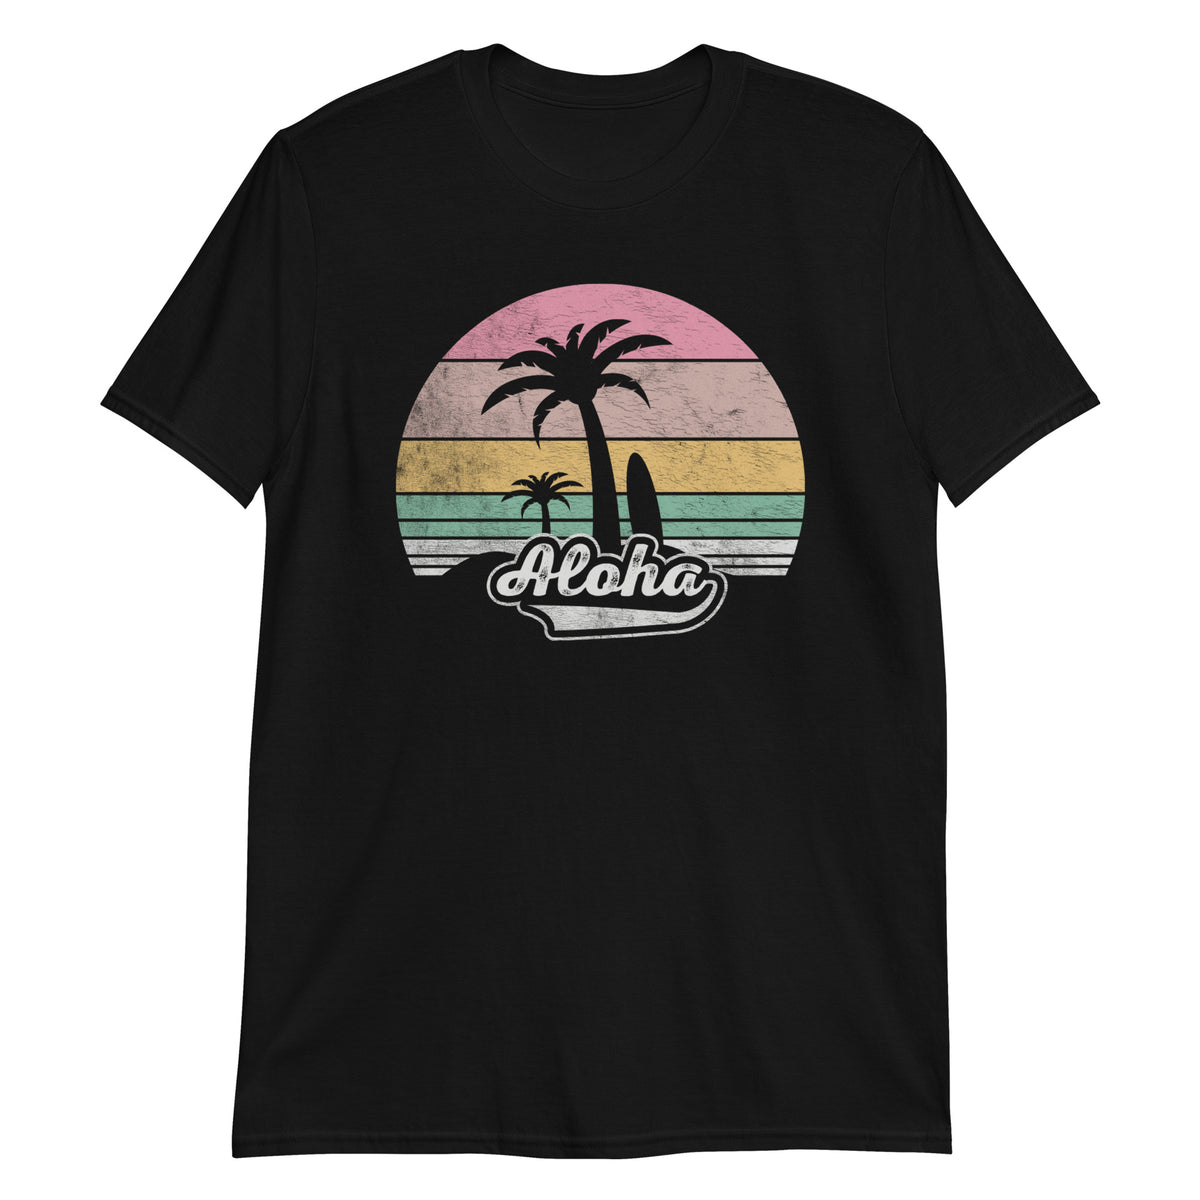 Aloha Hawaii Summer T-Shirt